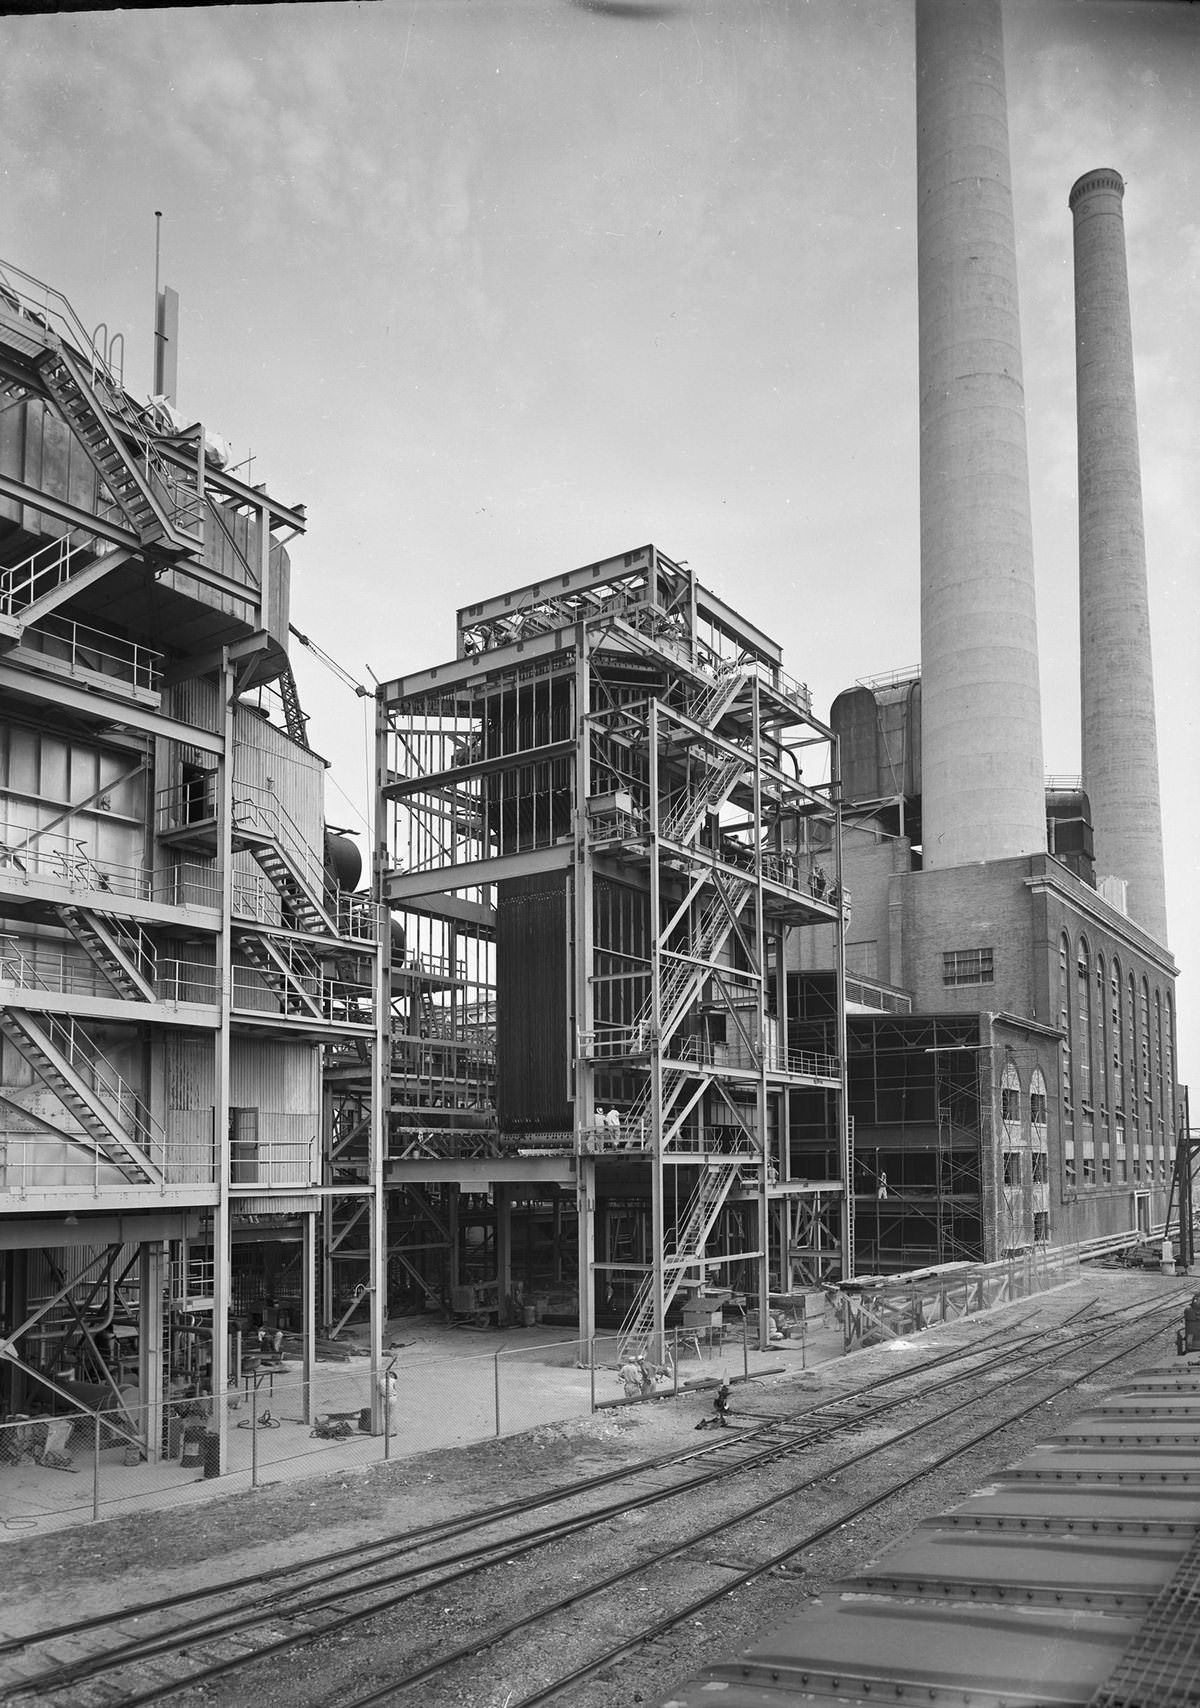 Power plant, downtown Dallas, Texas, 1953